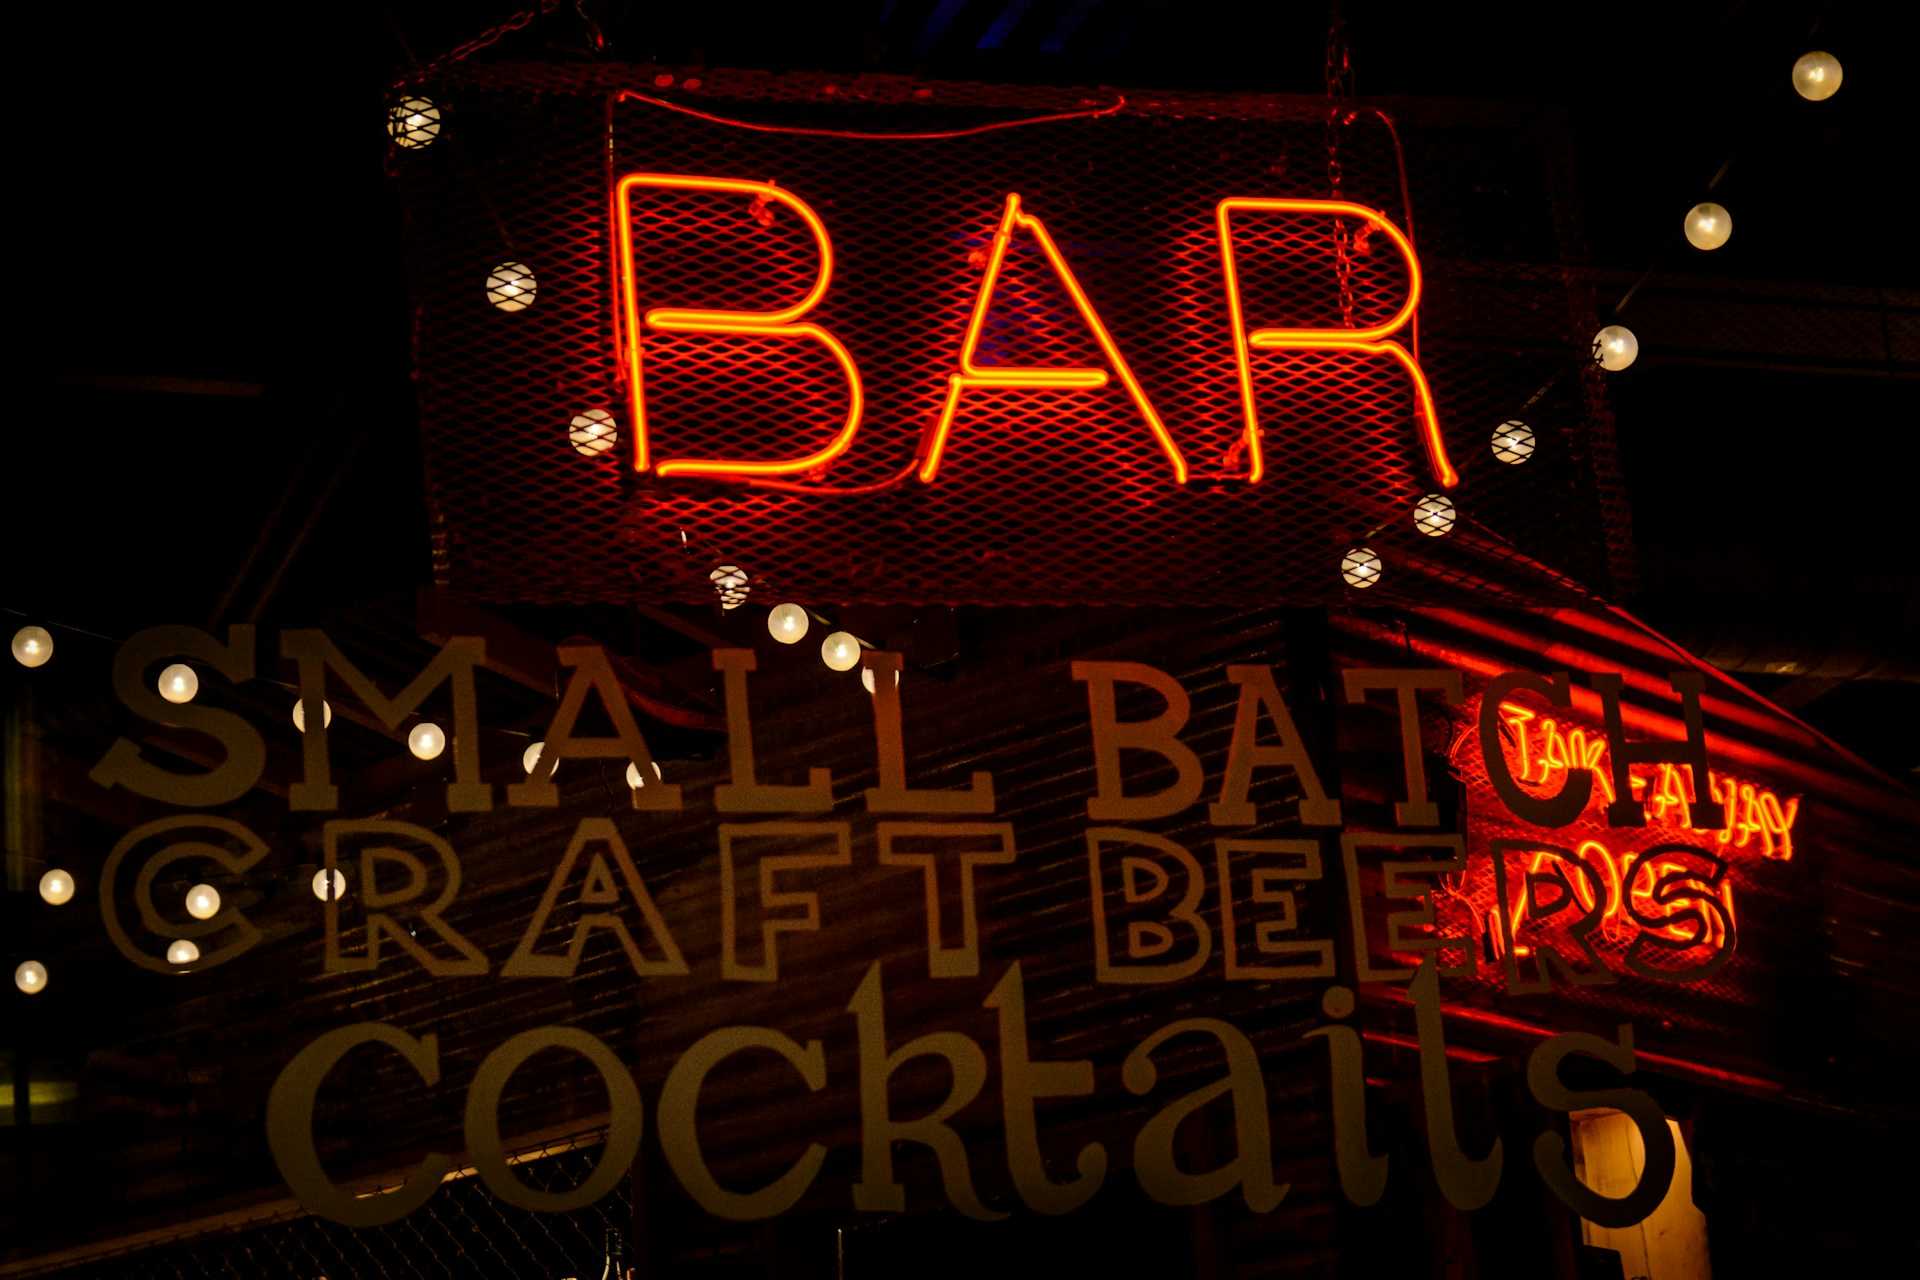 Bar neon photo by <a href="https://unsplash.com/@trommelkopf">Steve Harvey</a>